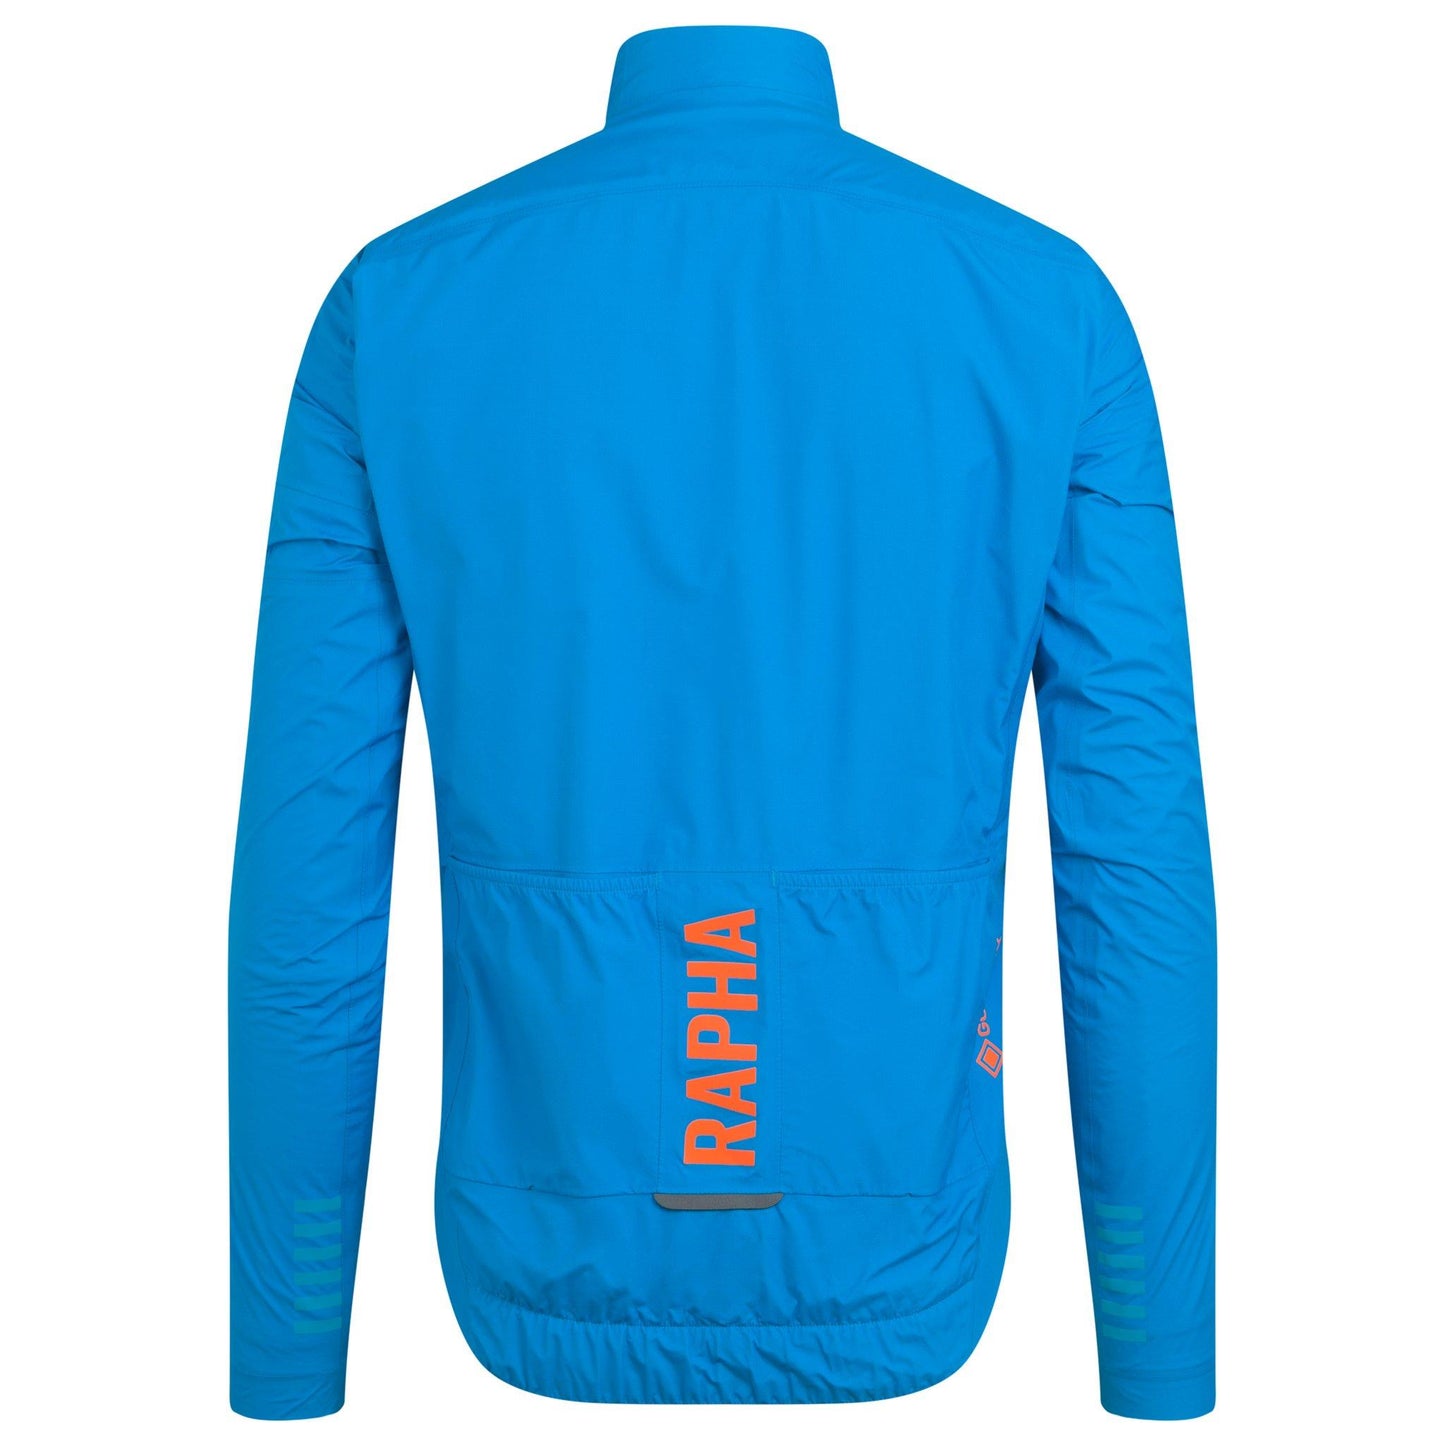 Rapha Men's Pro Team Gore-Tex Insulated Rain Jacket, Blue/Orange